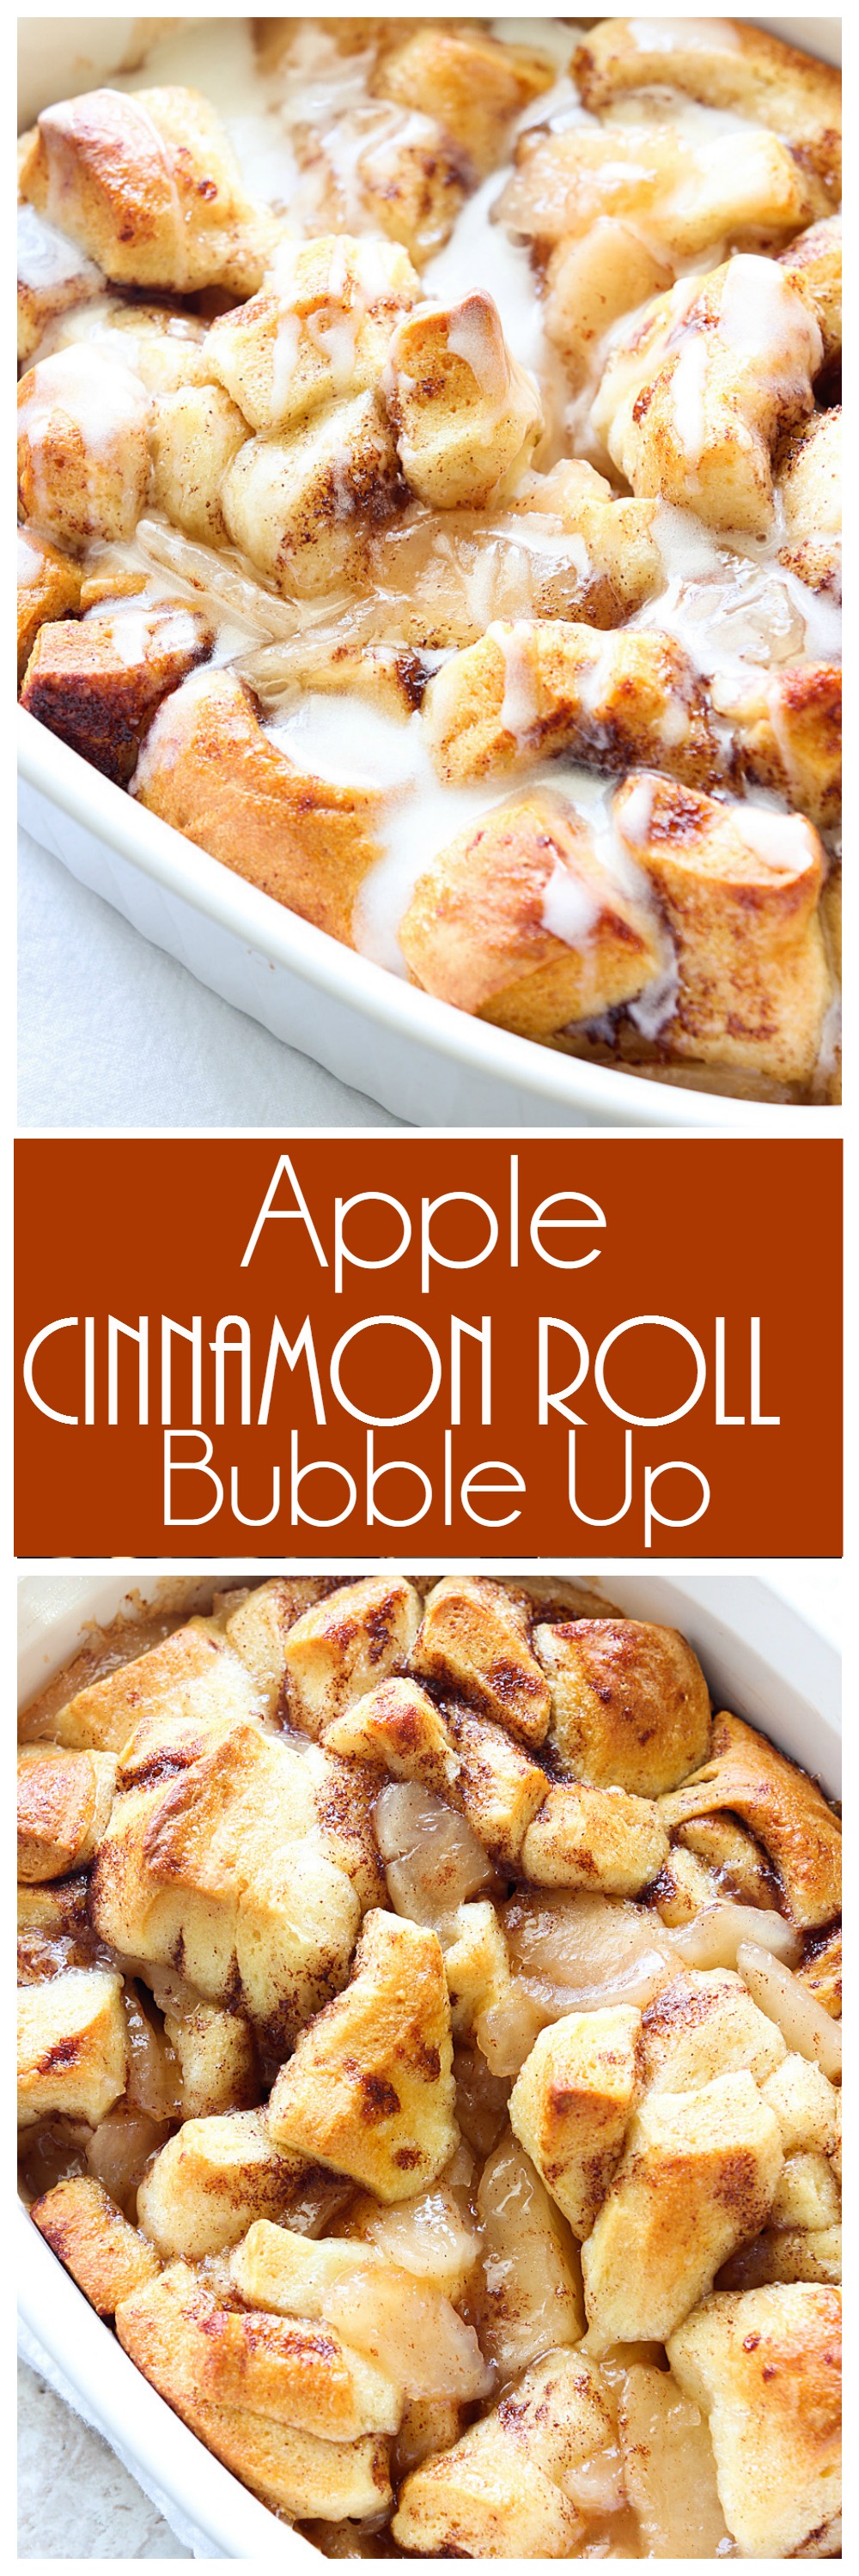 Apple Cinnamon Roll Bubble Up